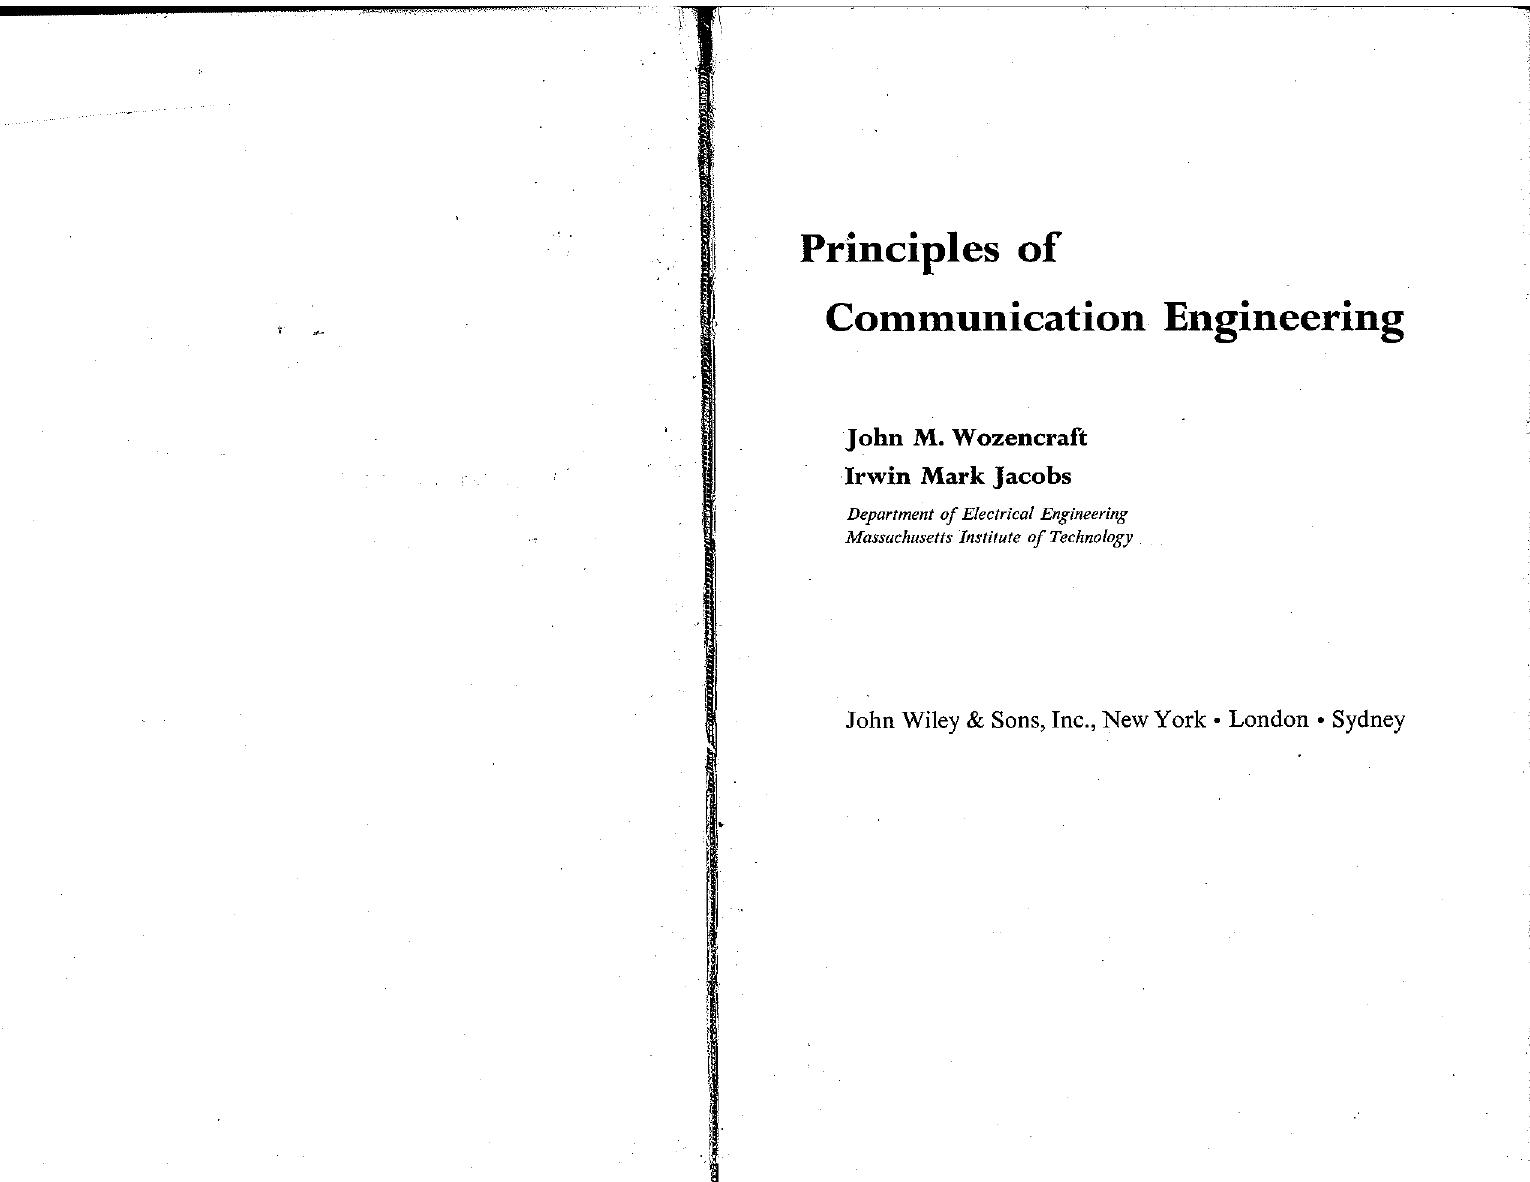 Principles of communication engineering 1965.pdf